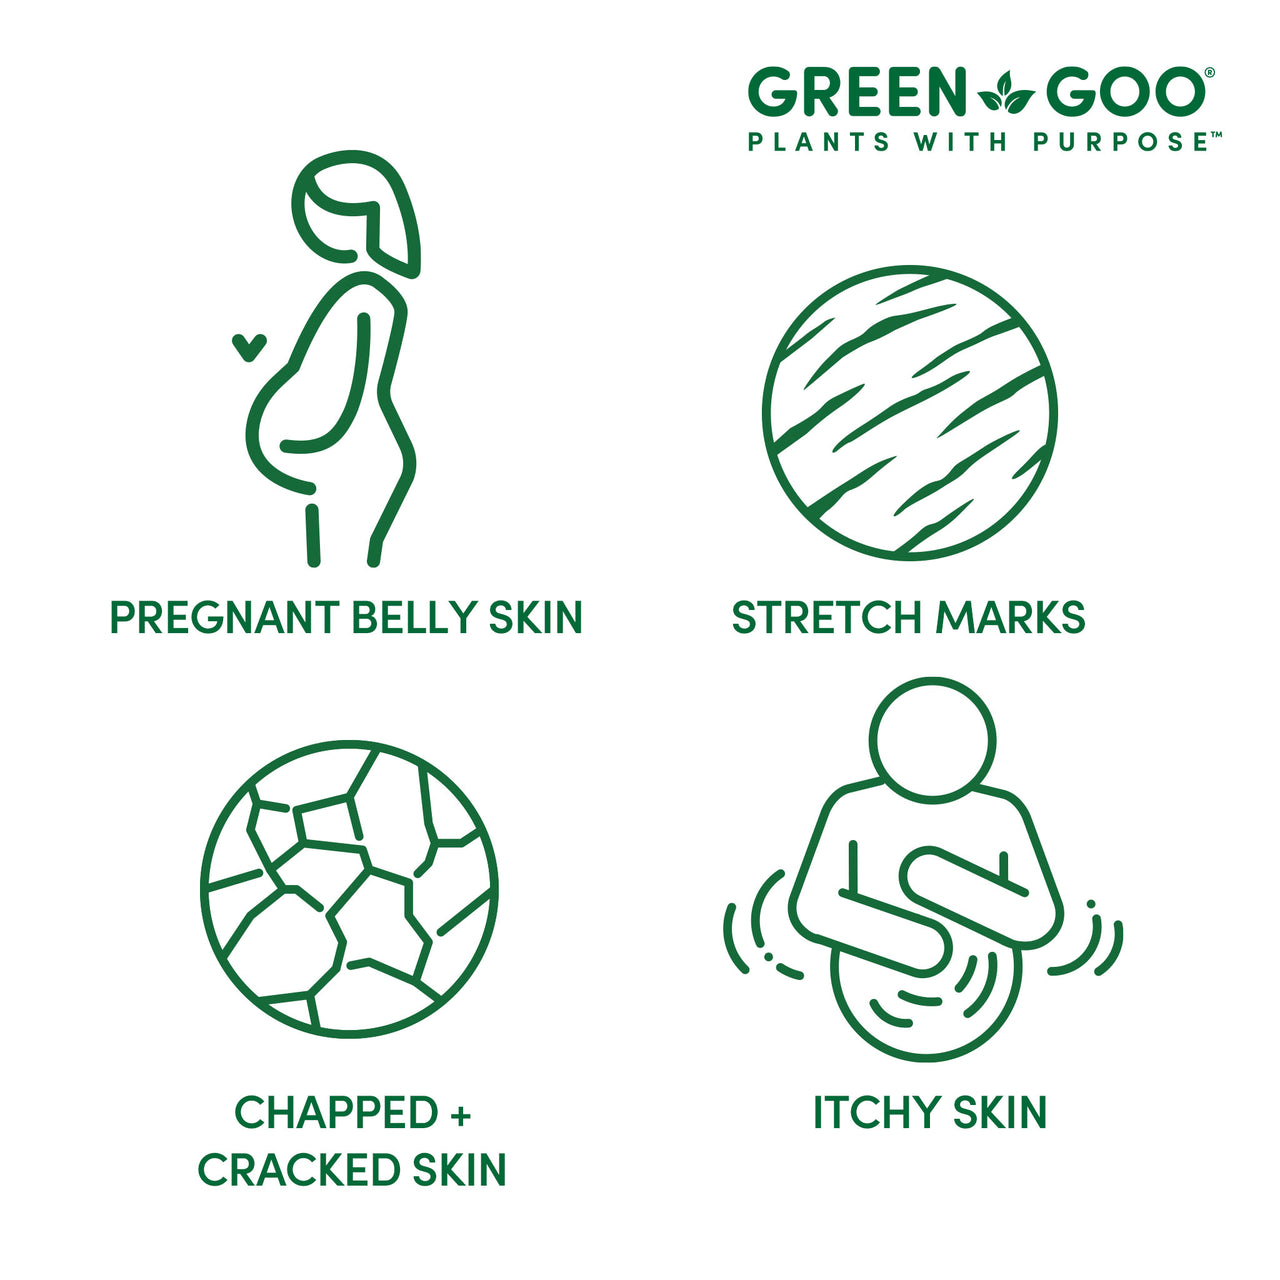 Belly Balm | Green Goo by Sierra Sage Herbs